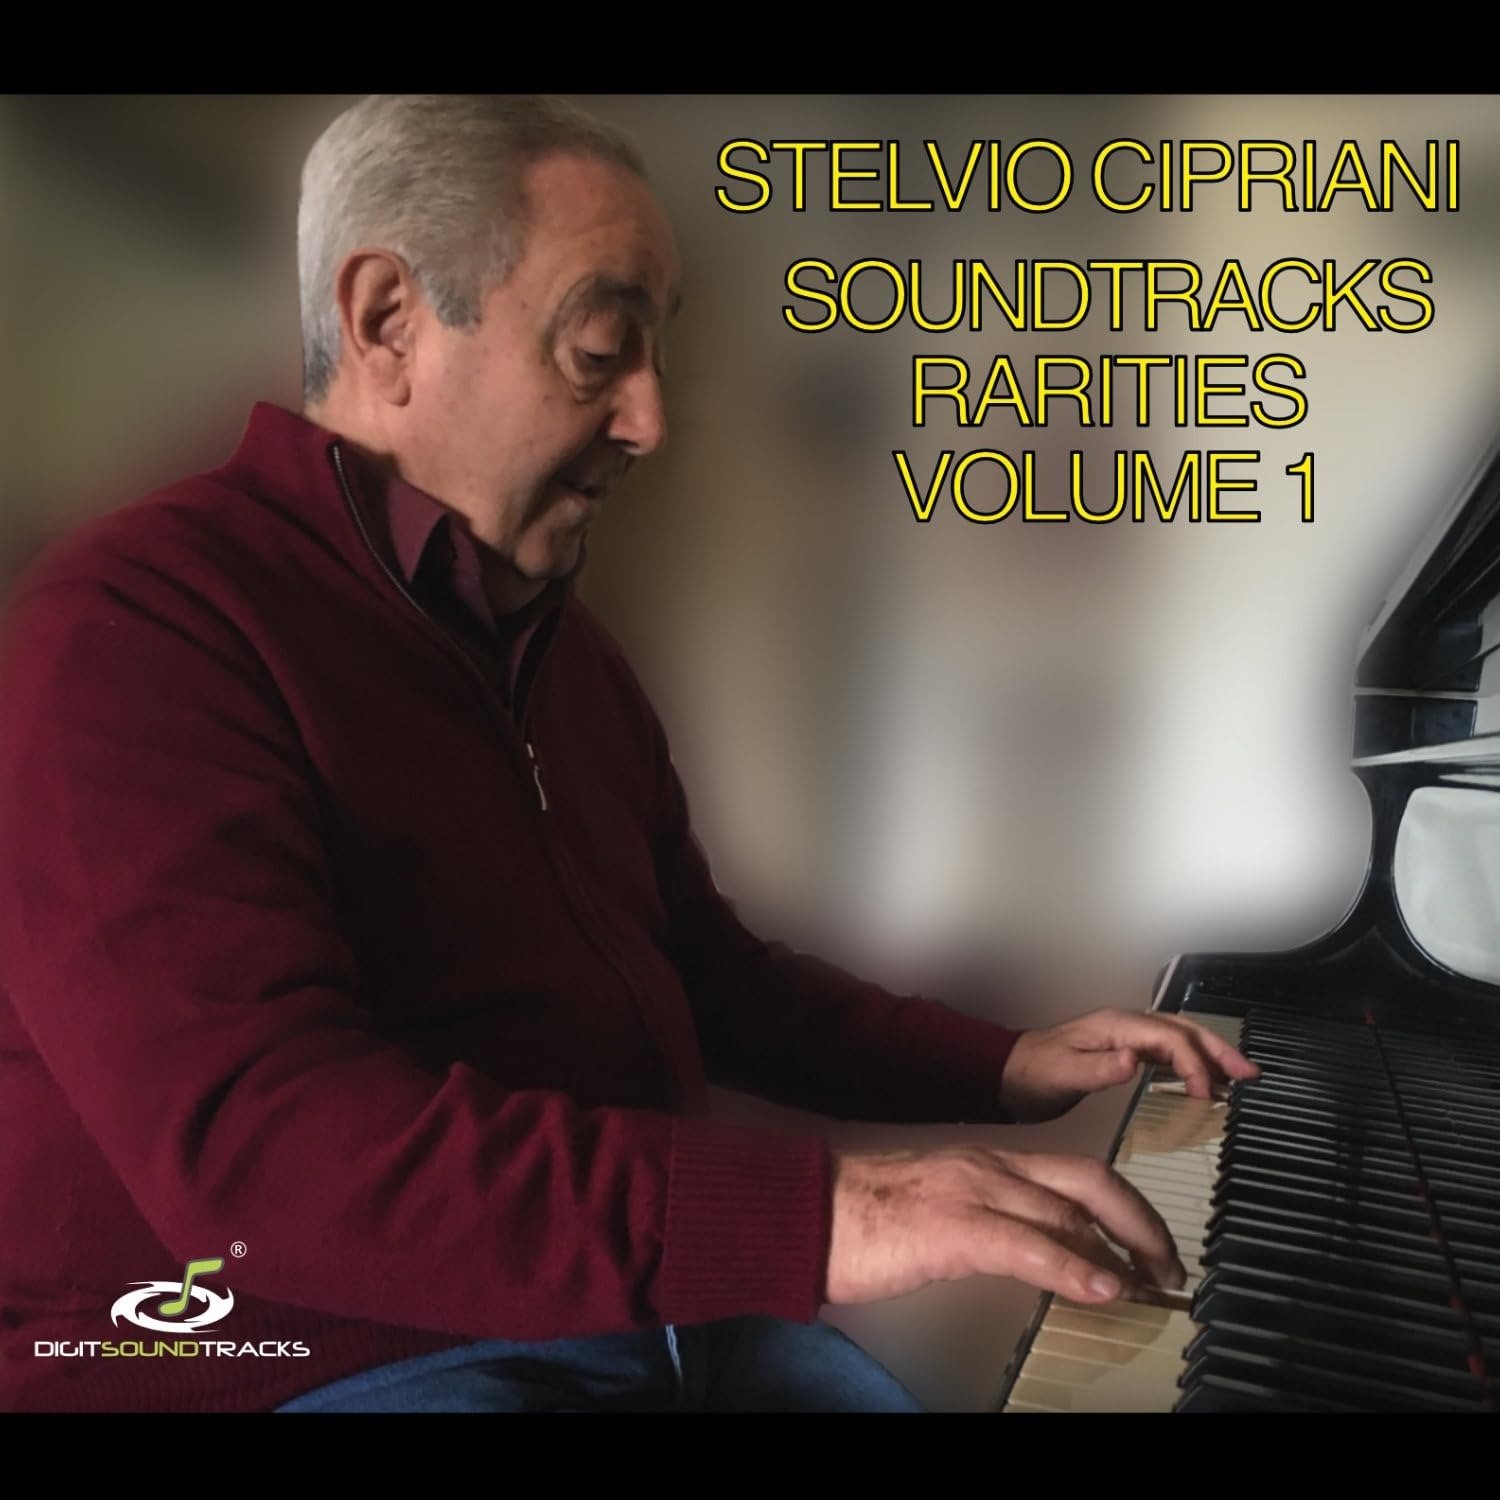 CD Shop - CIPIRIANI, STELVIO SOUNDTRACKS RARITIES VOLUME 1